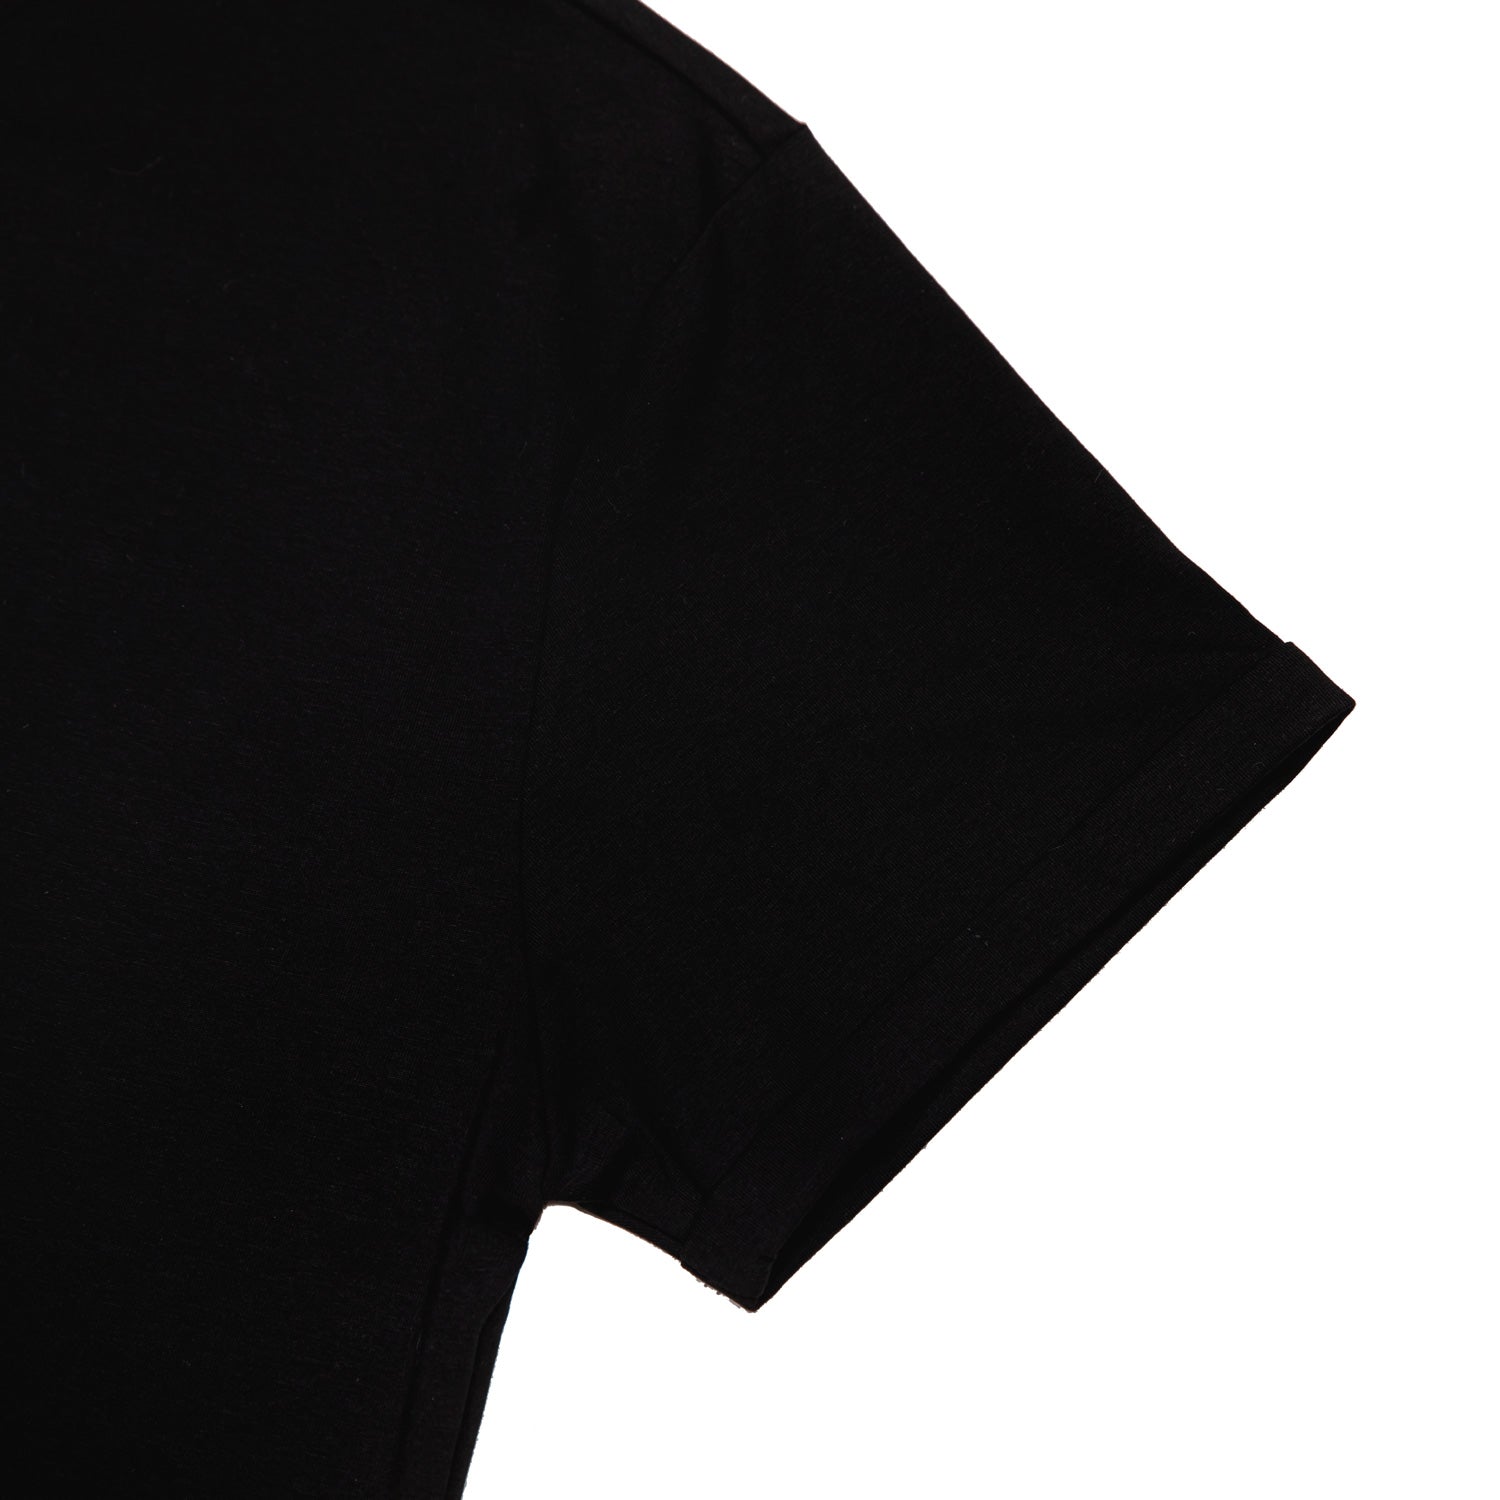 Deep black, T-shirt, shirt, man, plane tee, soft cotton, sleek, detail view,, sleeves